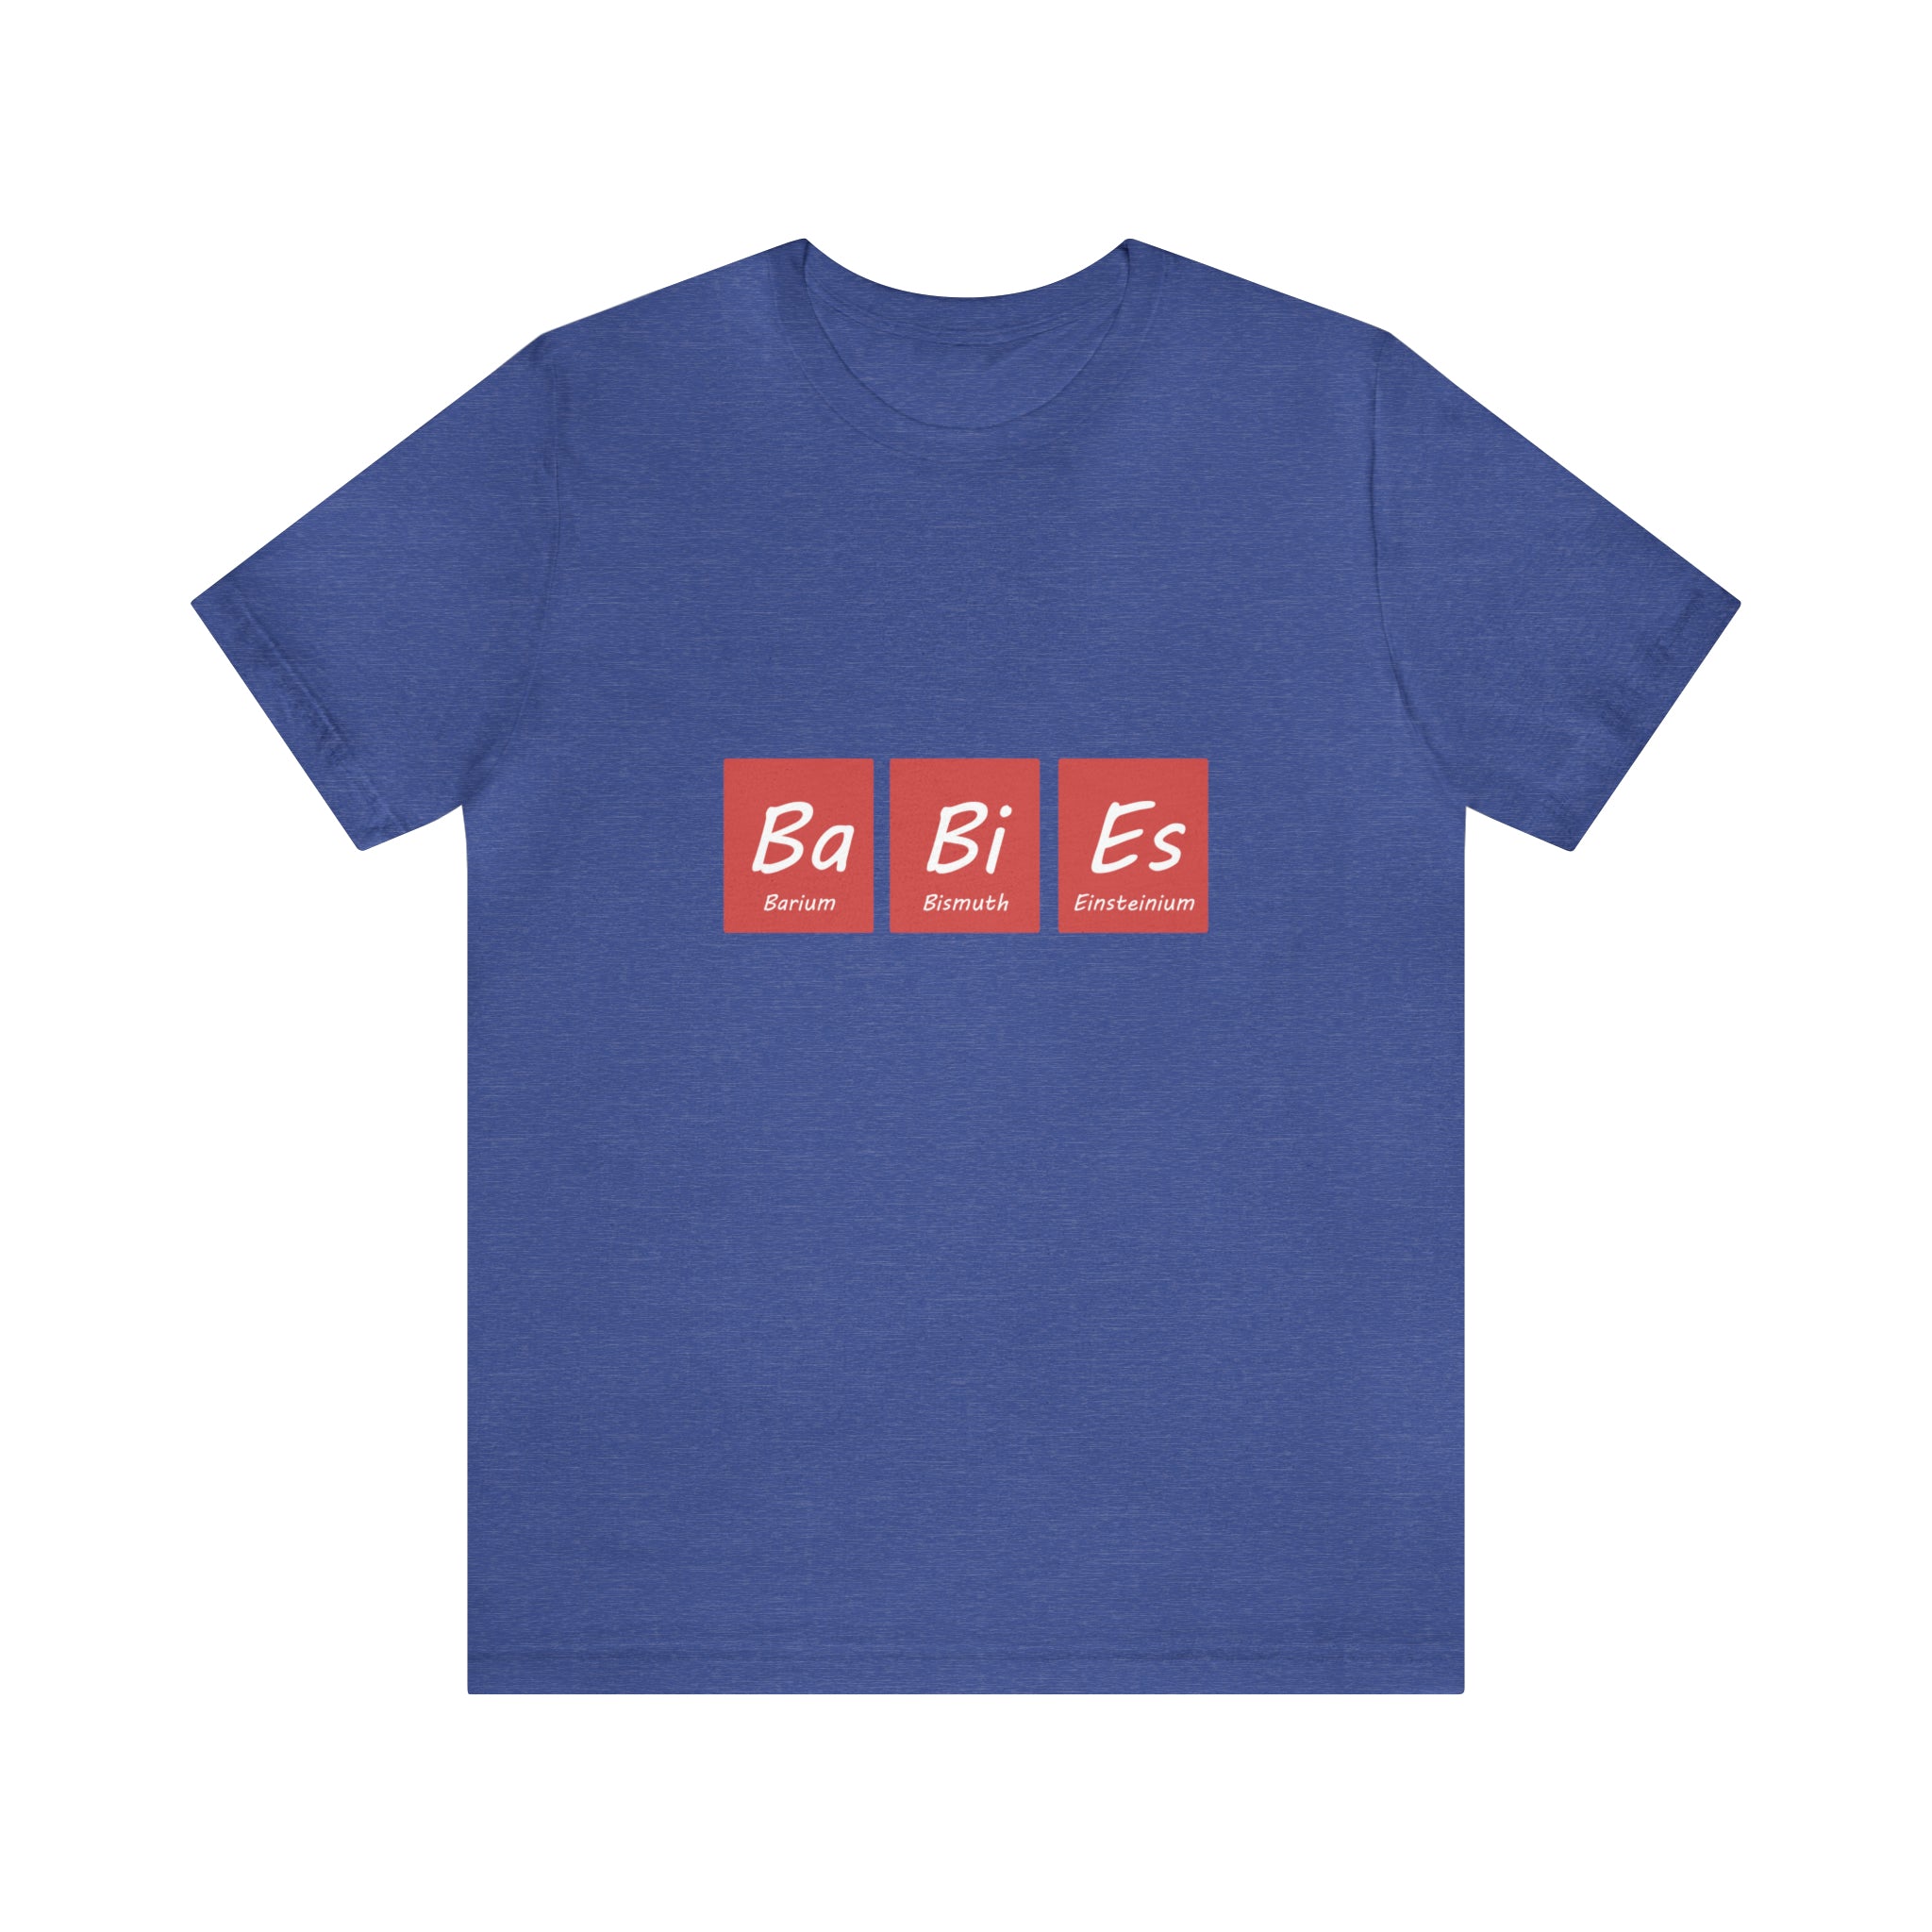 A Ba - Bi - Es T-Shirt with unique color combinations, featuring red squares.